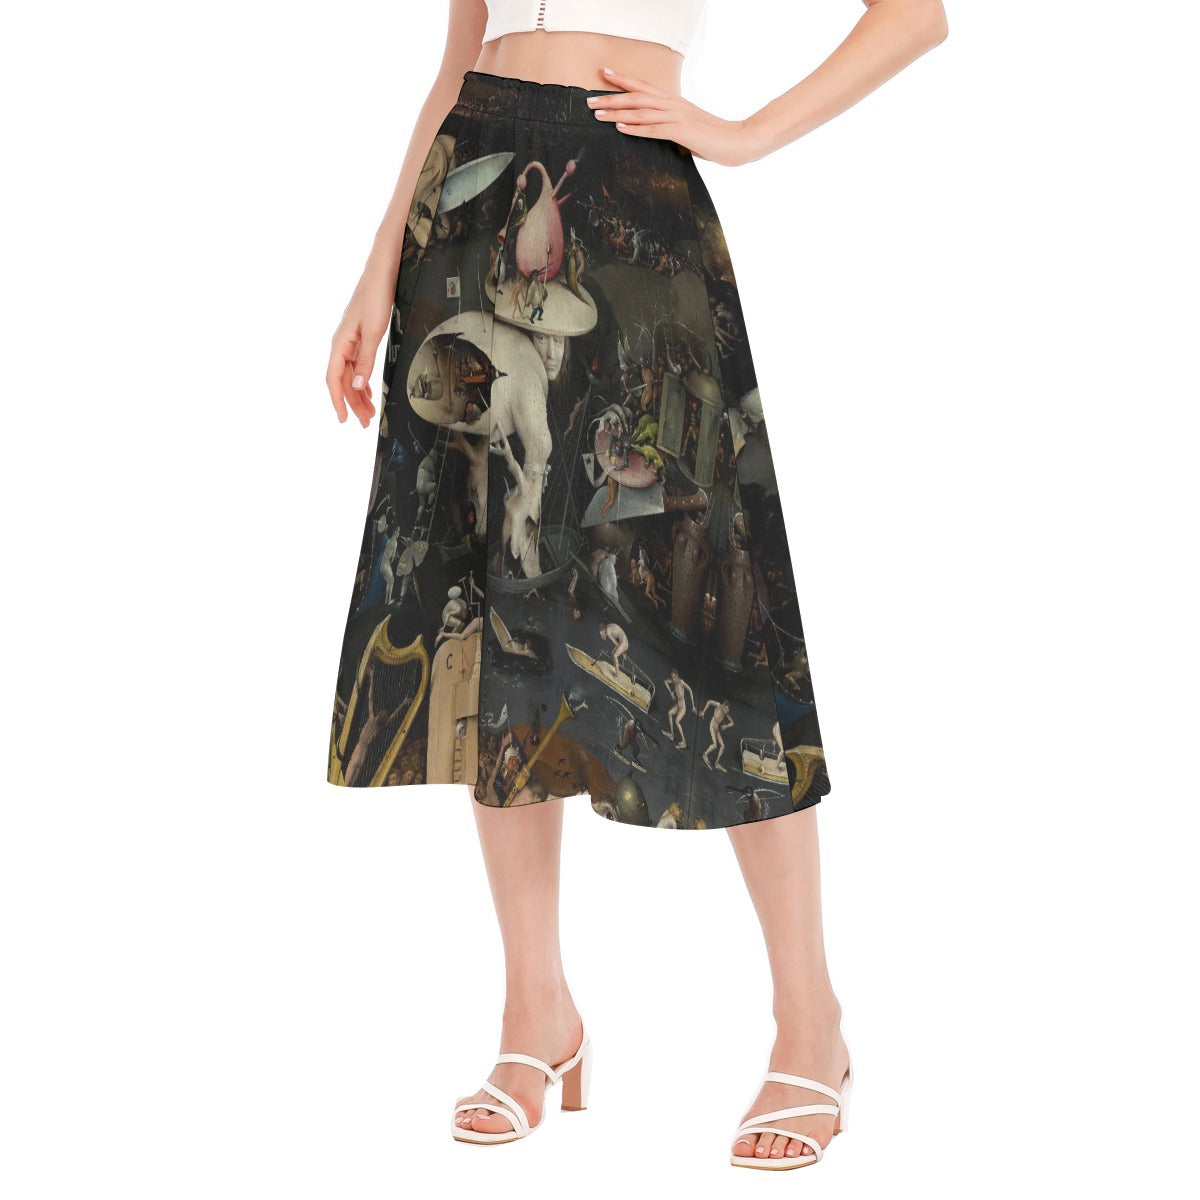 Bosch Inspired Fashion - Digital Print Skirt